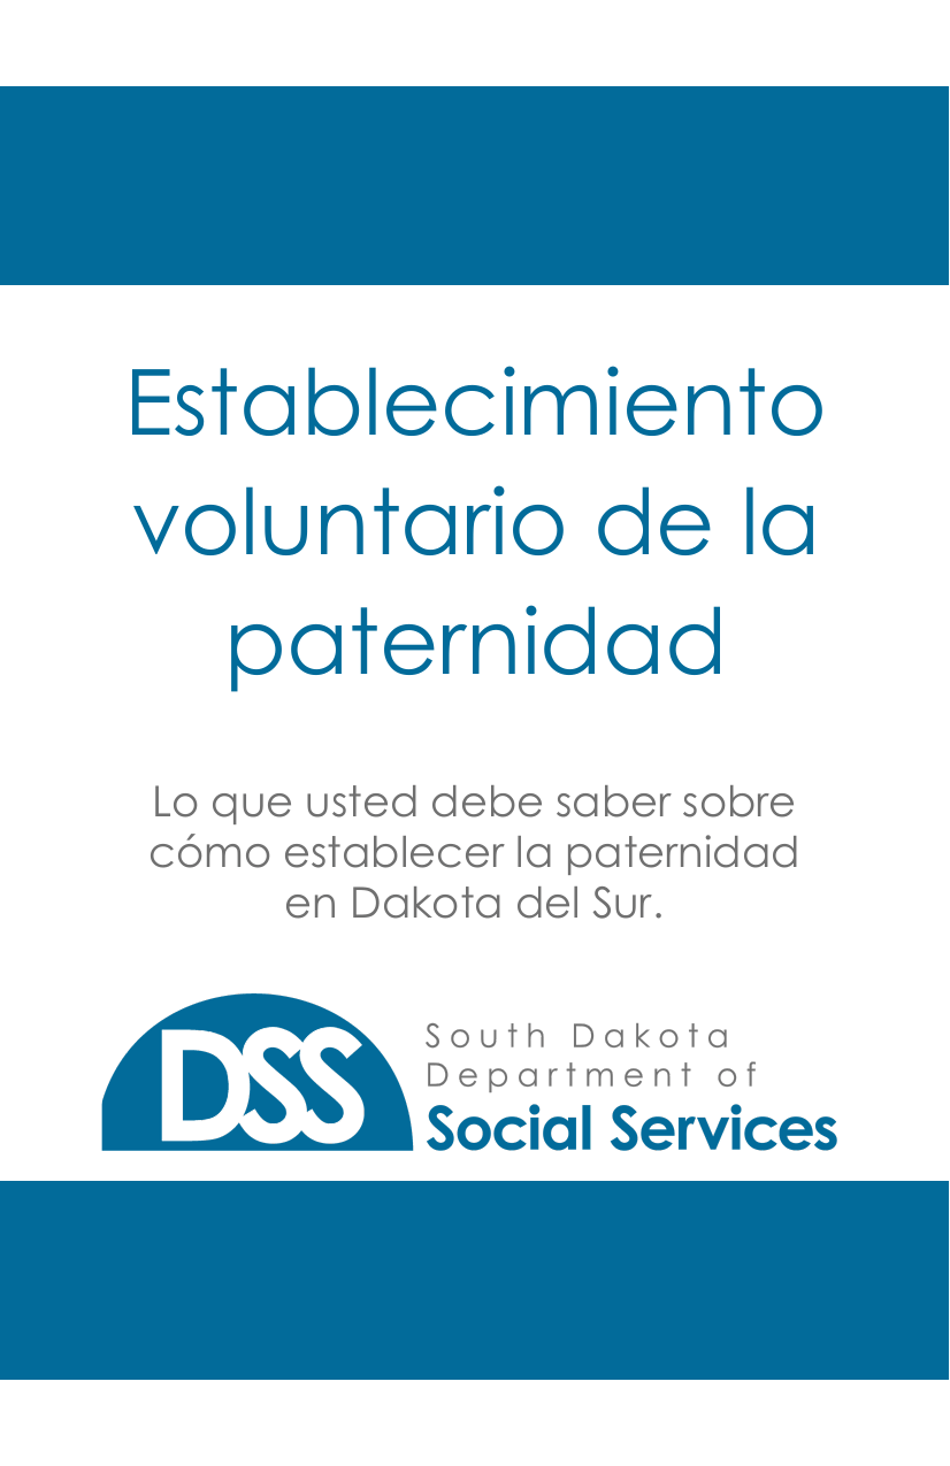 Form BRO / DCS6S Voluntary Acknowledgment of Paternity - South Dakota (English / Spanish), Page 1